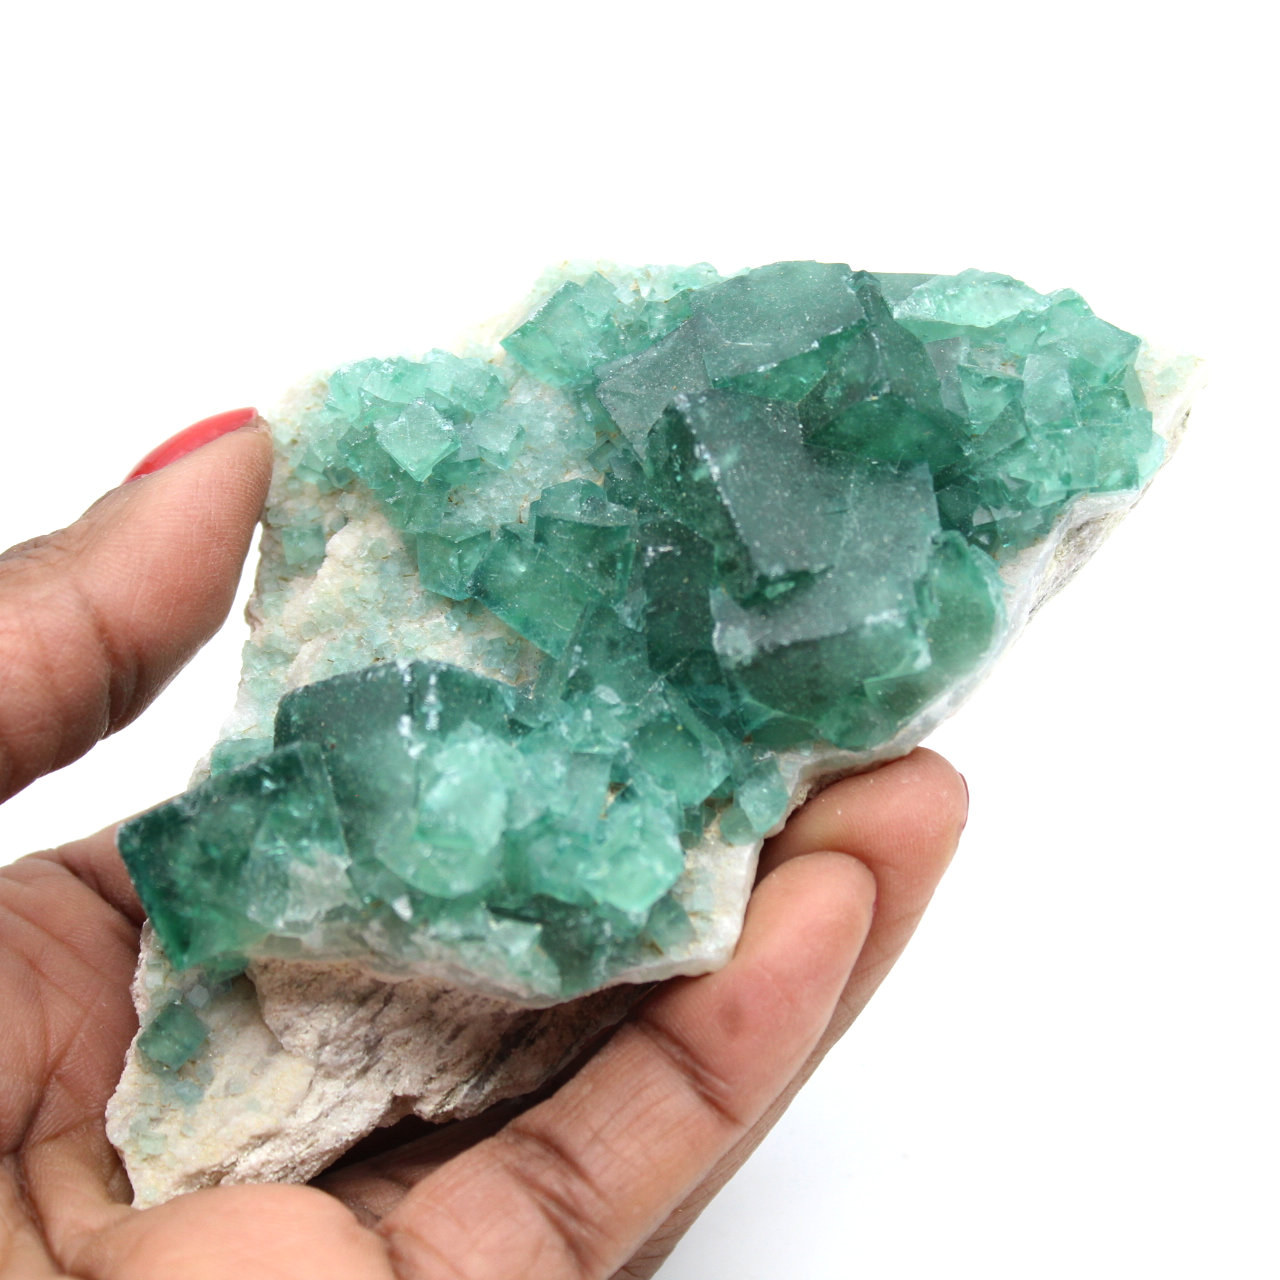 Fluorite naturelle brute en cristaux verts